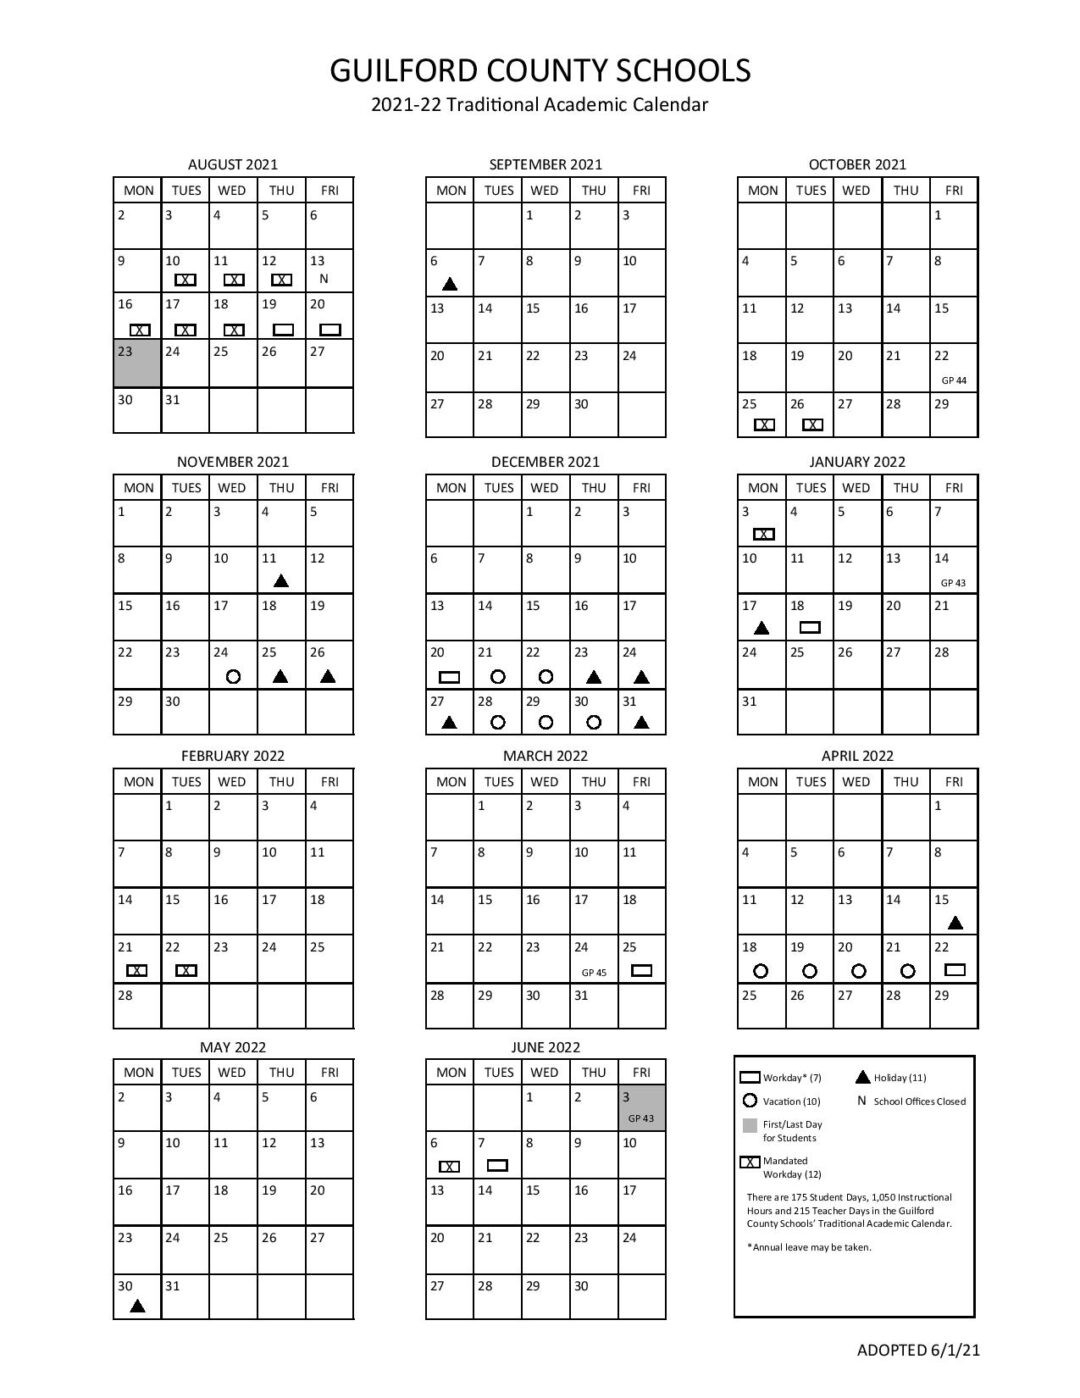 Guilford County School Calendar 2021-2022 In Pdf-Calendar 2021 To 2022 Pdf